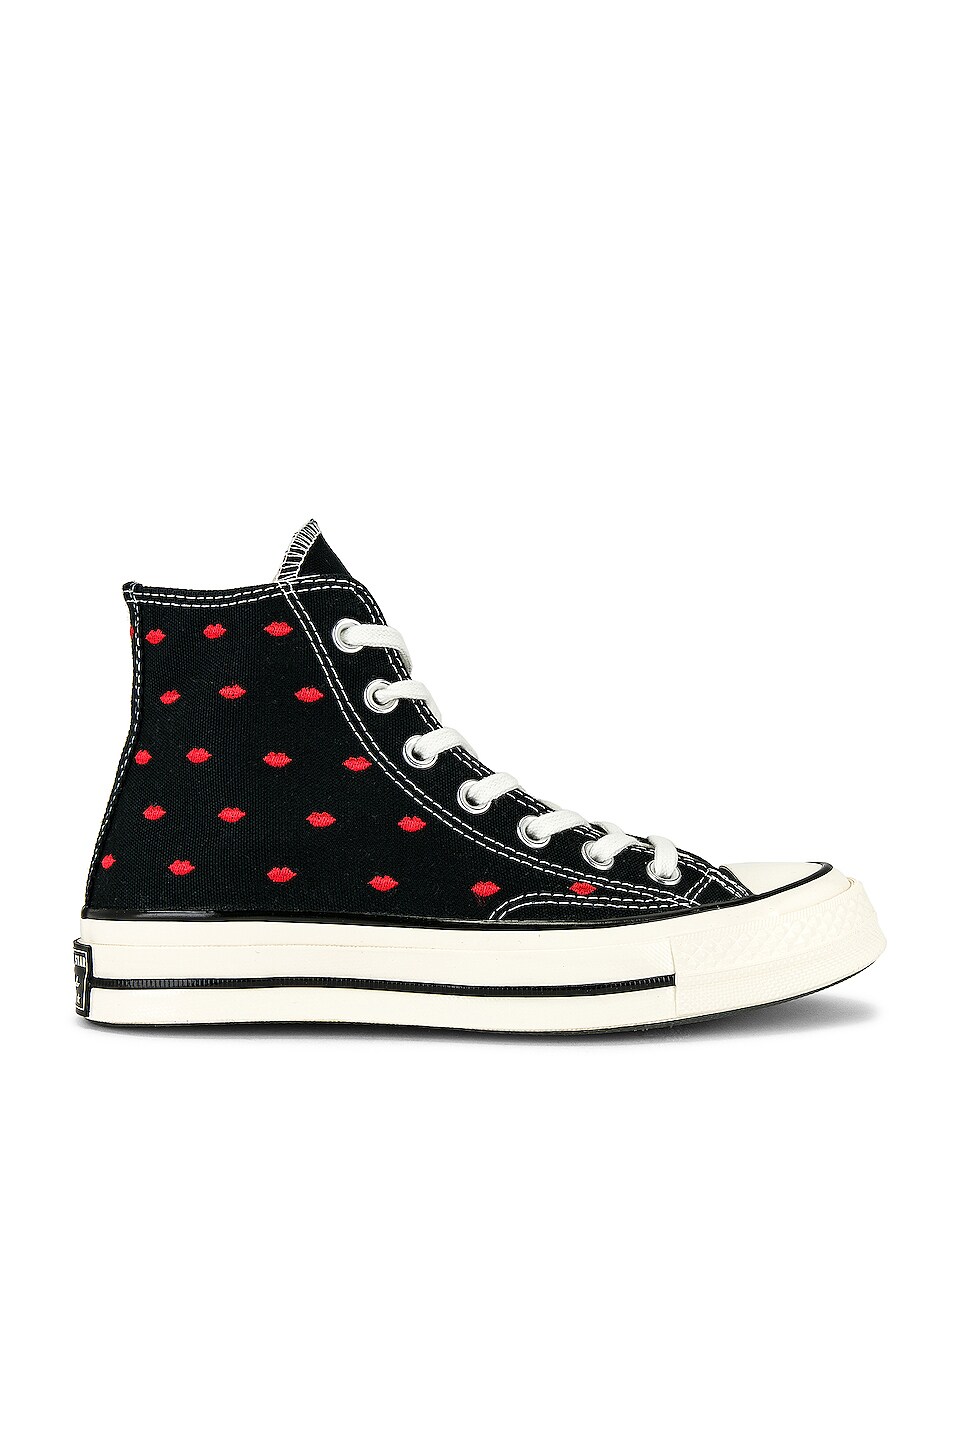 Converse Chuck 70 Sneaker in Black, University Red, & Egret | REVOLVE